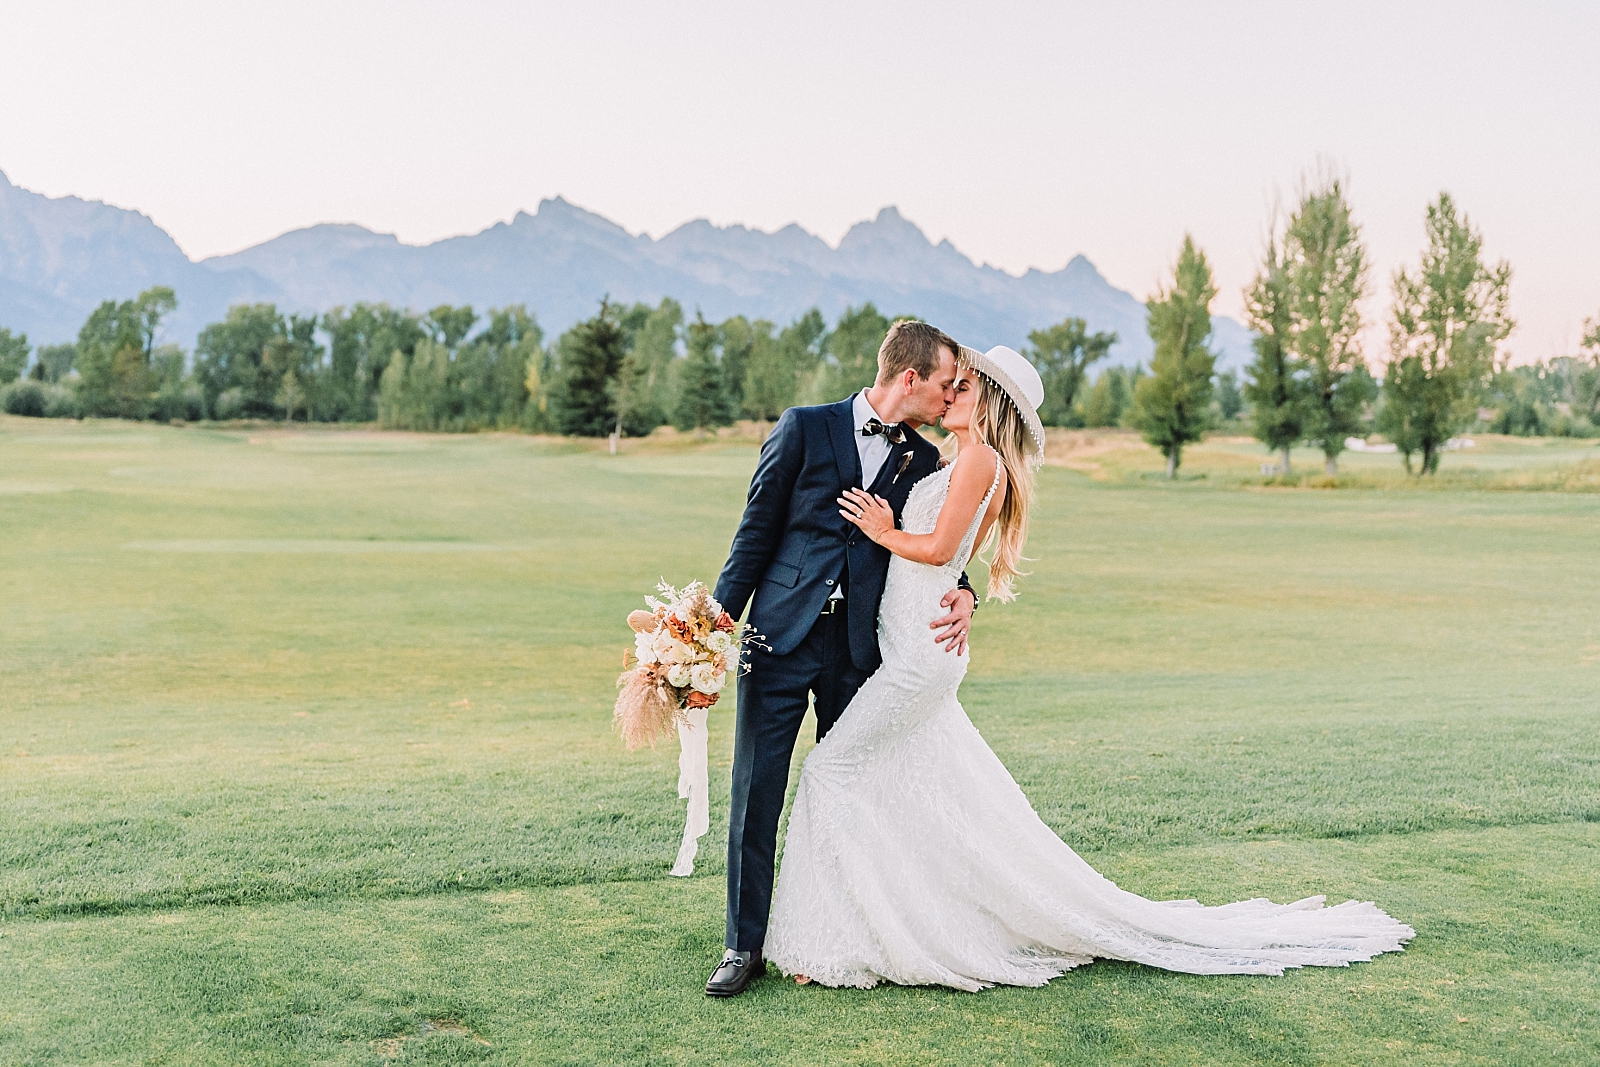 Jackson Hole Golf and Tennis Club Wedding Venue, bride and groom kissing on wedding day